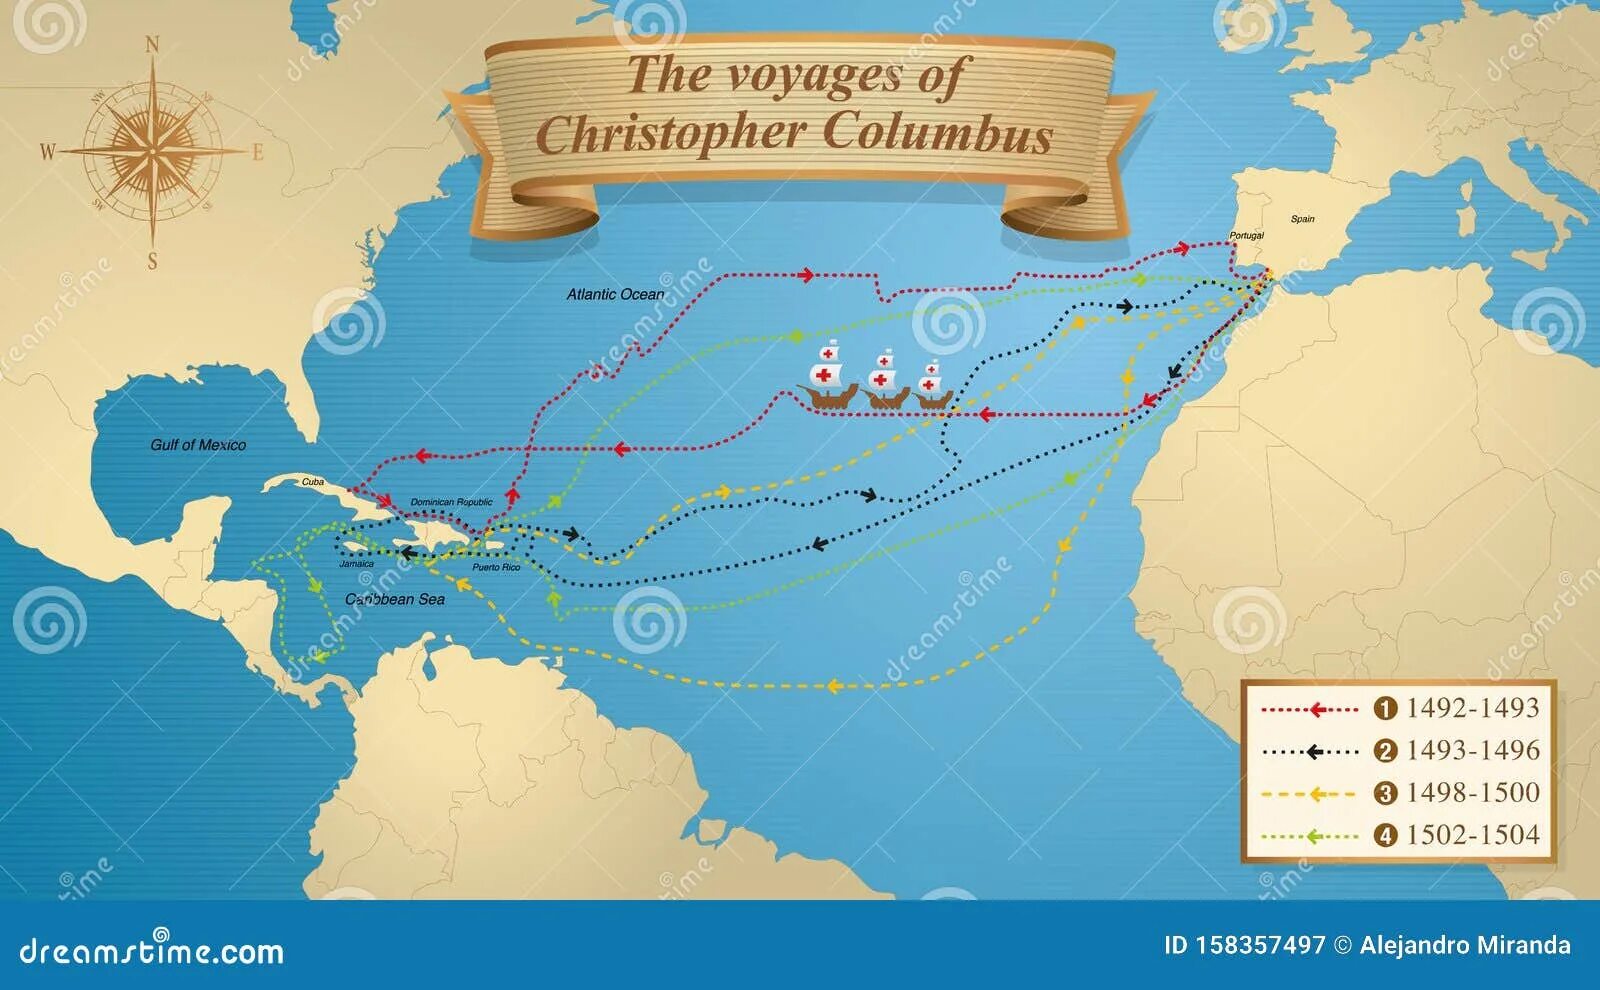 Путешествие Христофора Колумба 1492. Маршрут путешествия Христофора Колумба. Маршрут путешествия Христофора Колумба 1492-1493. Путешествие христофора колумба на карте